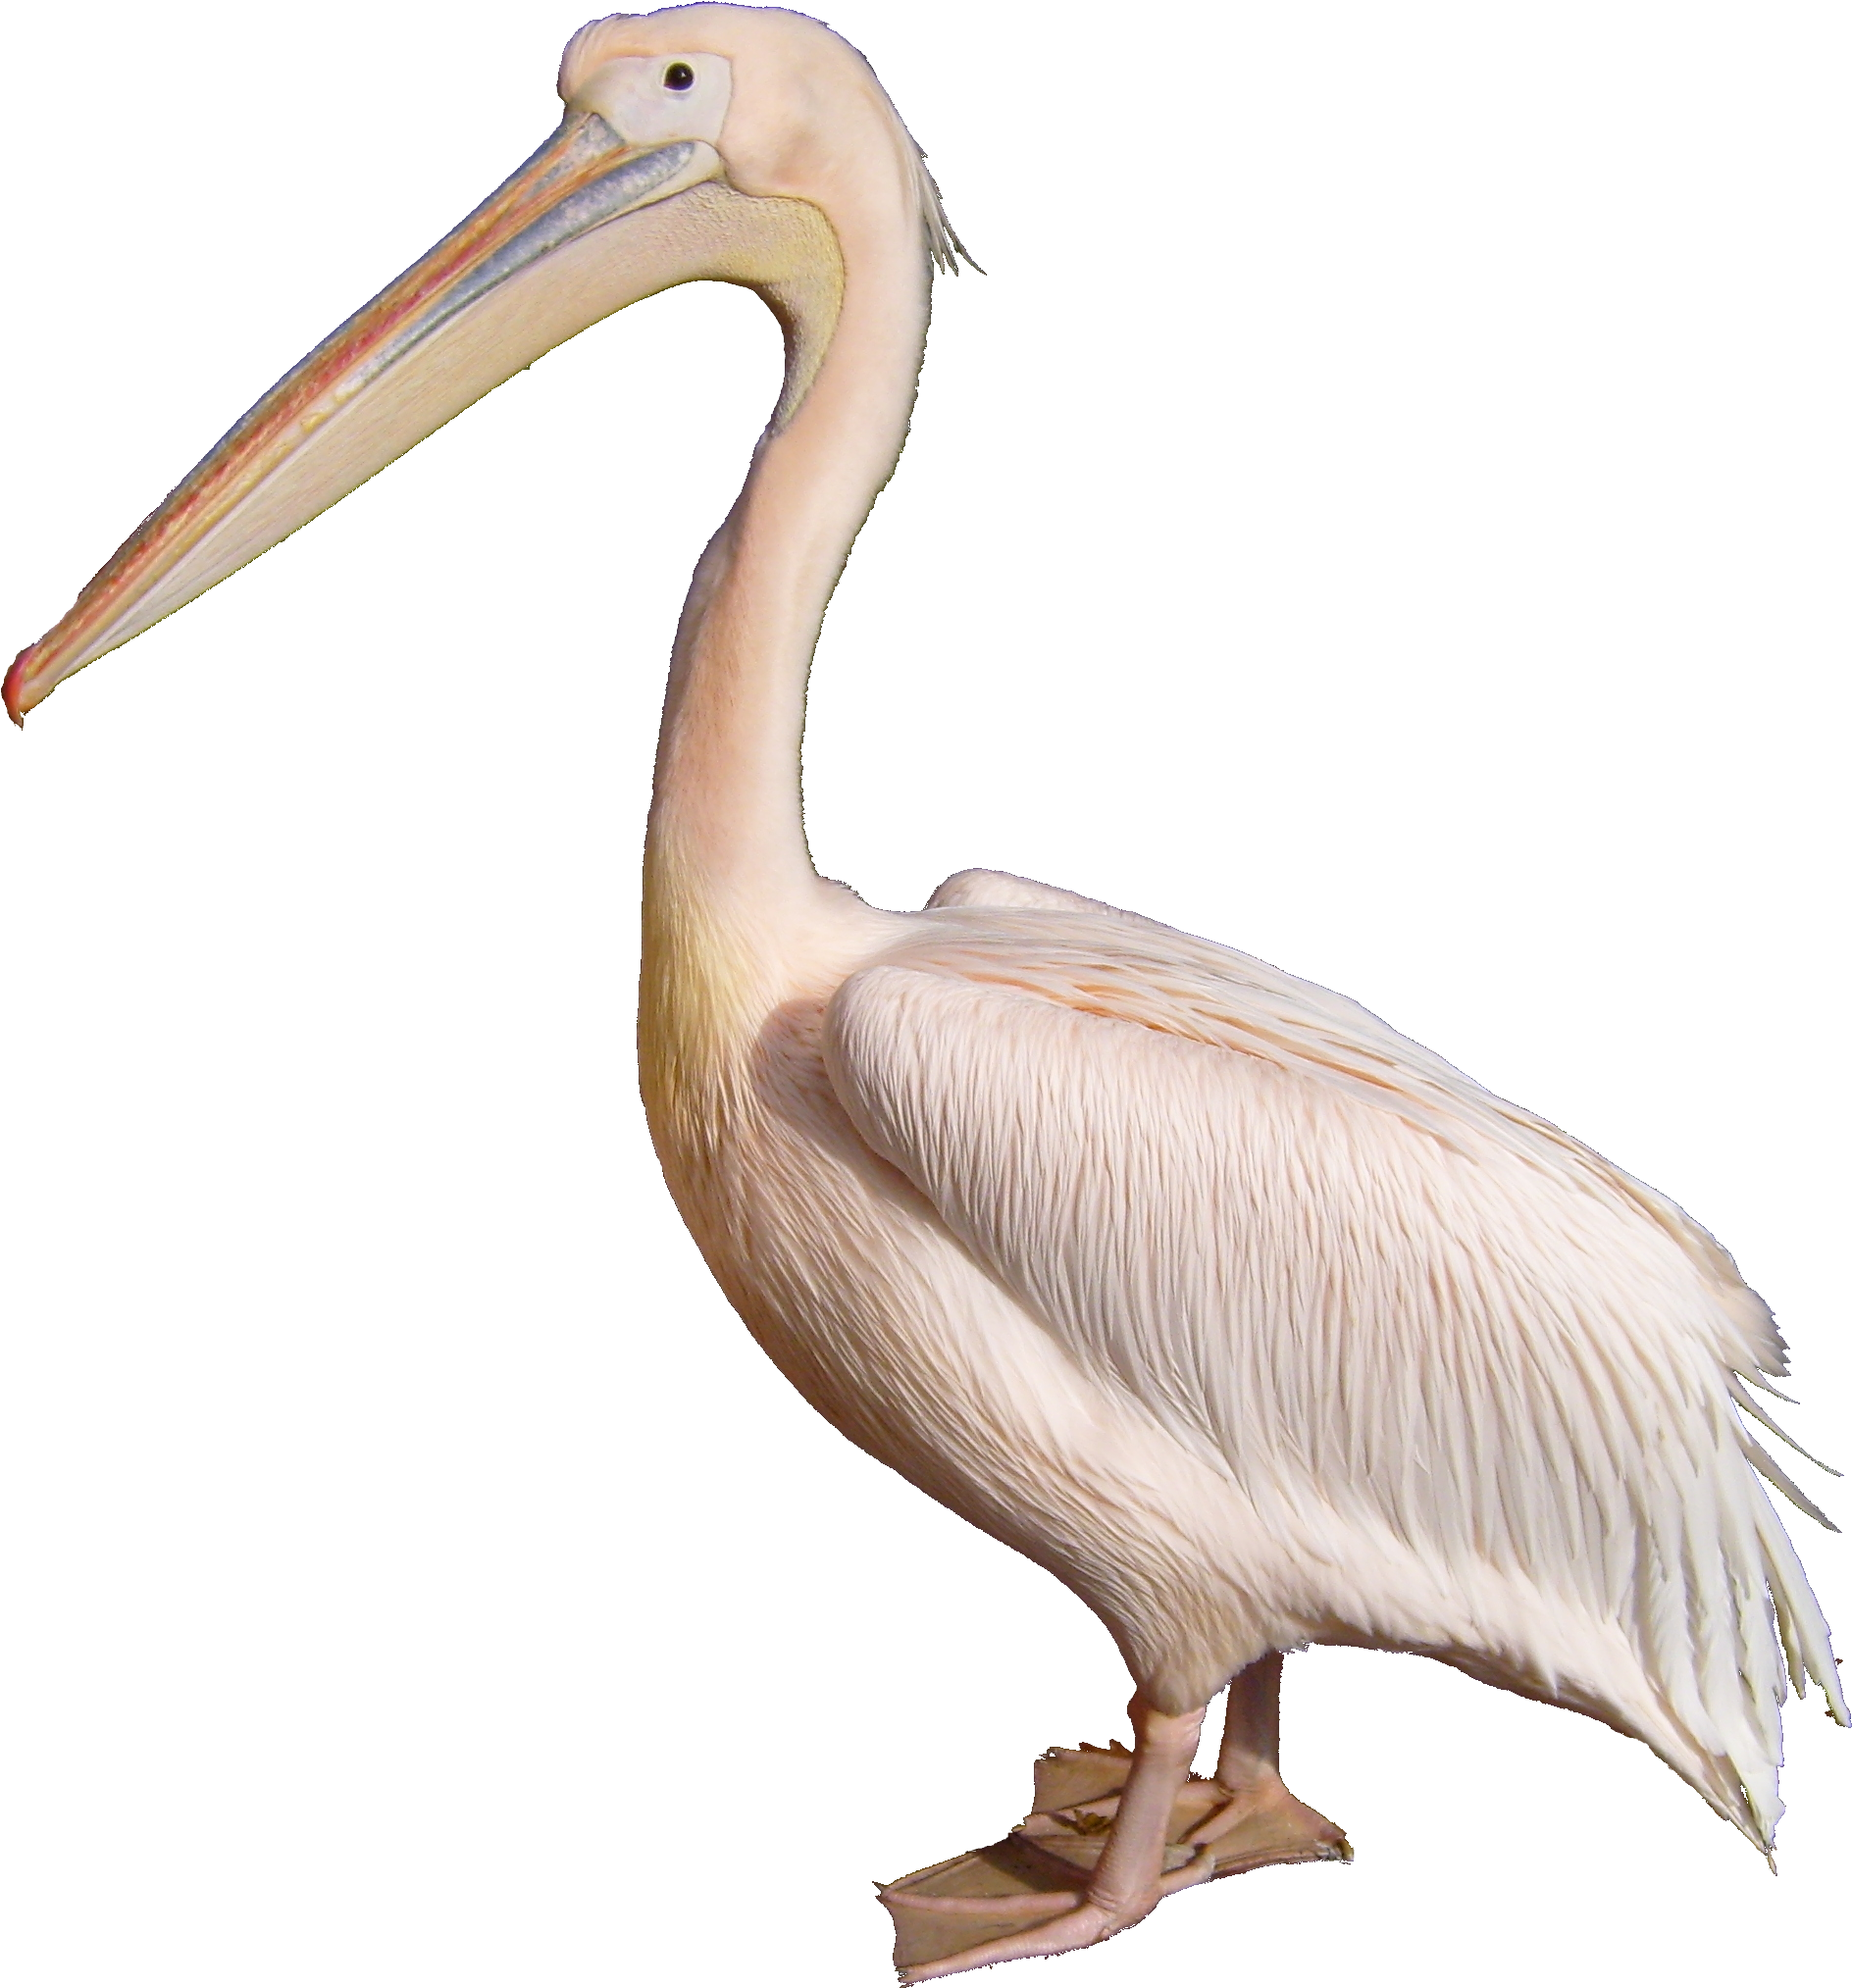 A White Bird With Long Beak